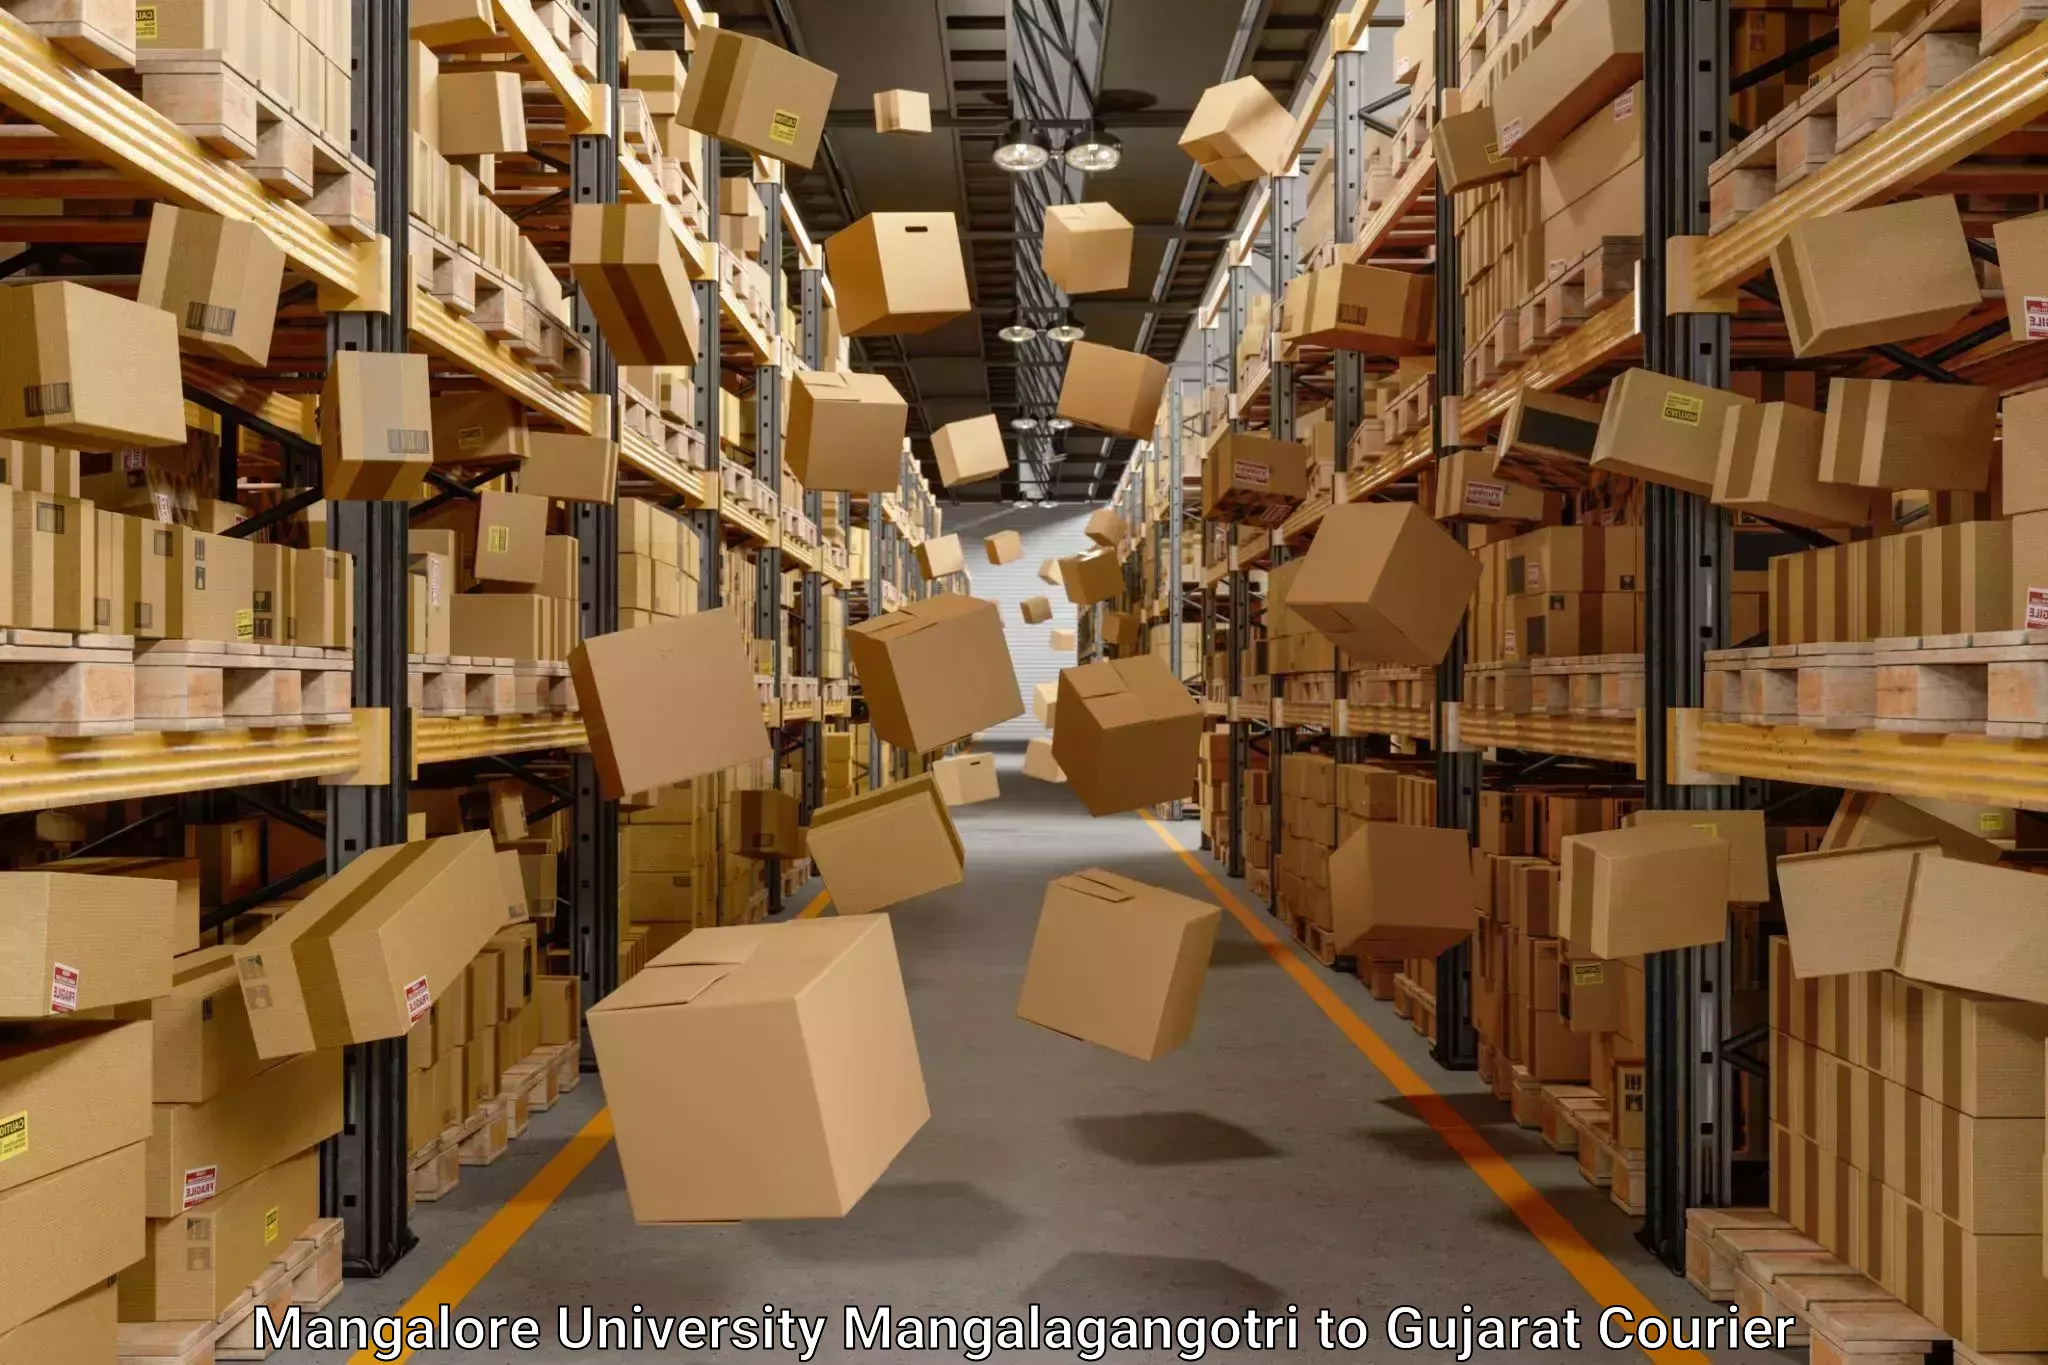 Trusted relocation experts Mangalore University Mangalagangotri to Gujarat